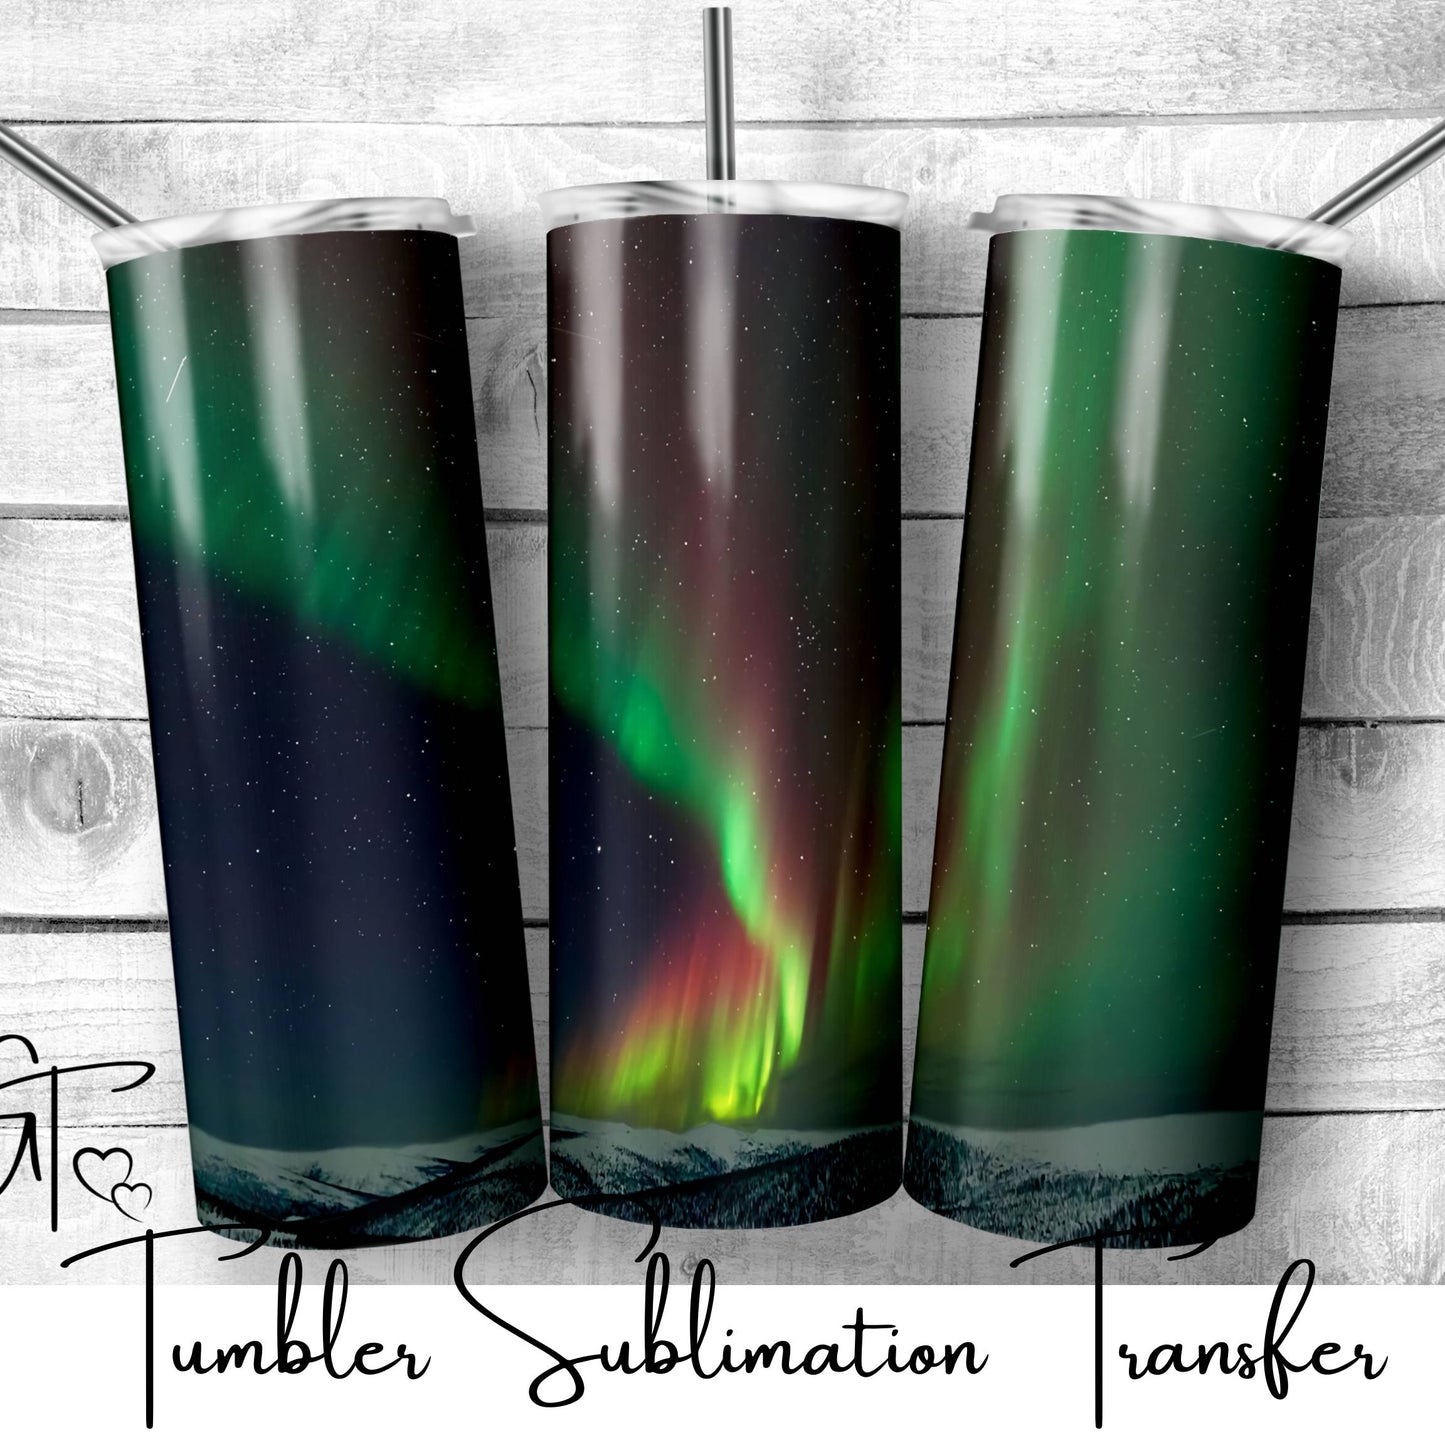 SUB458 Northern lights (aurora borealis) Camping Tumbler Sublimation Transfer